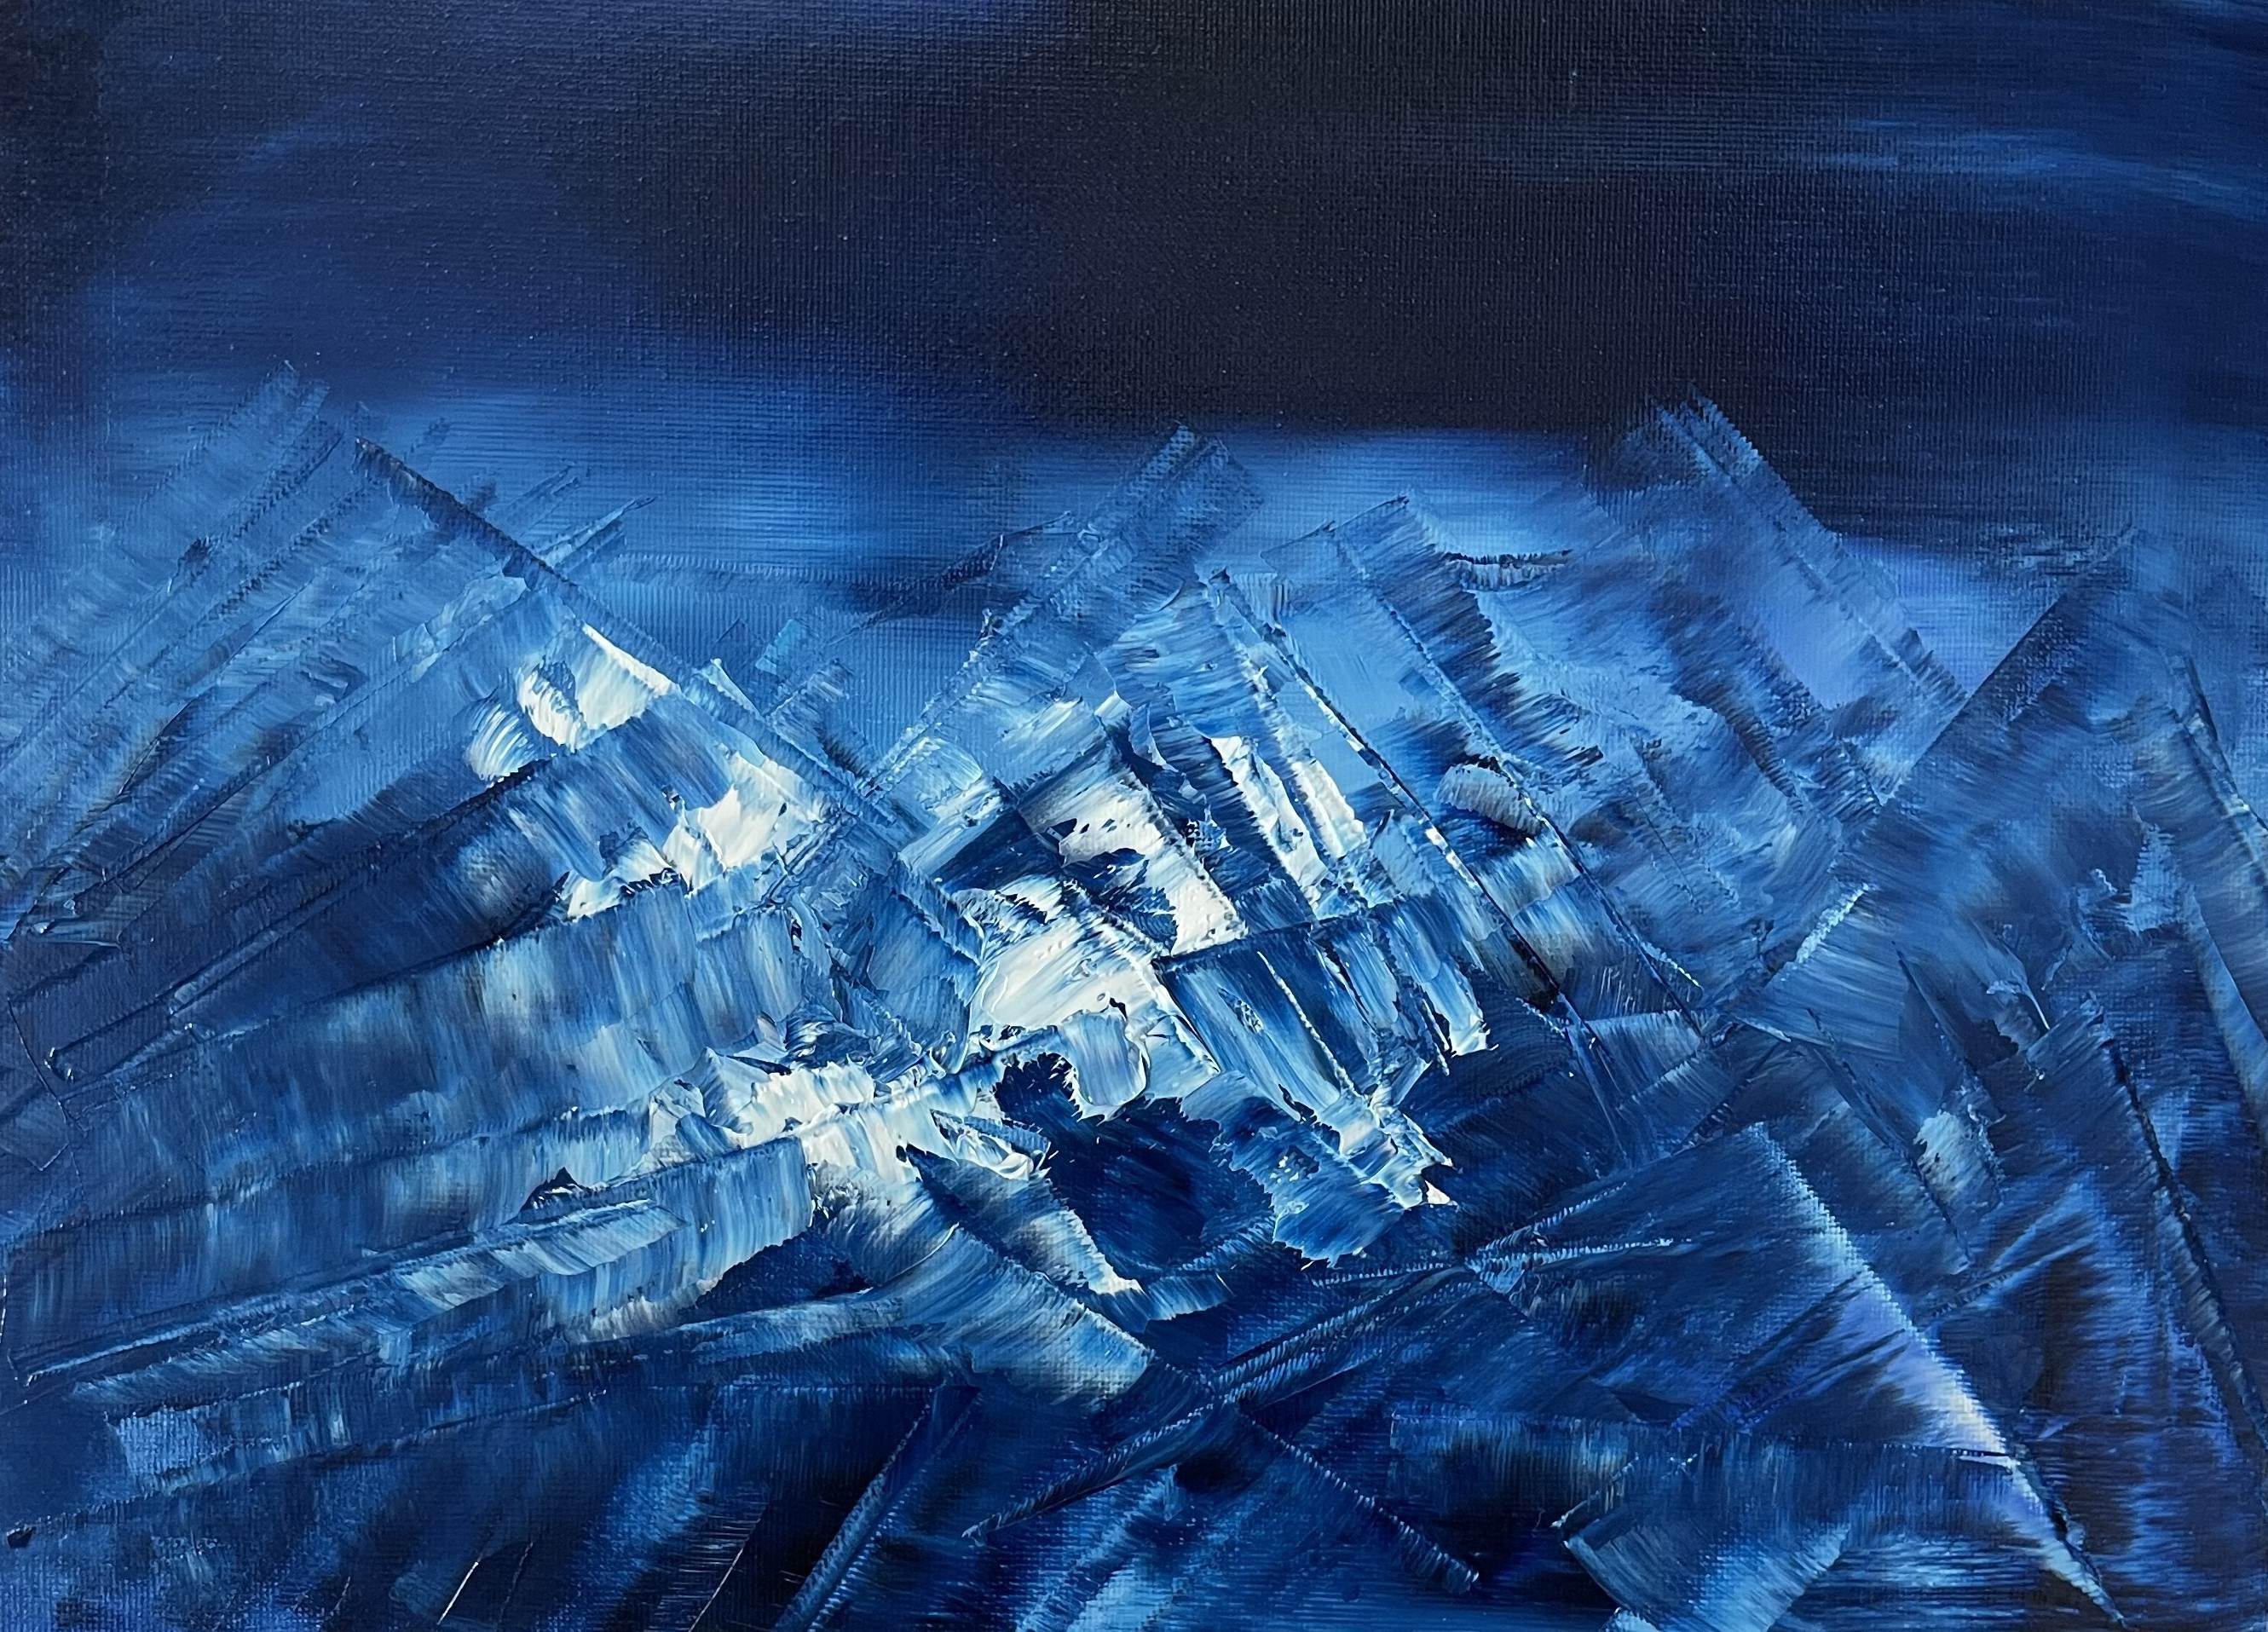 Blue Dream Landscape 07 - Painting by Juan Jose Garay